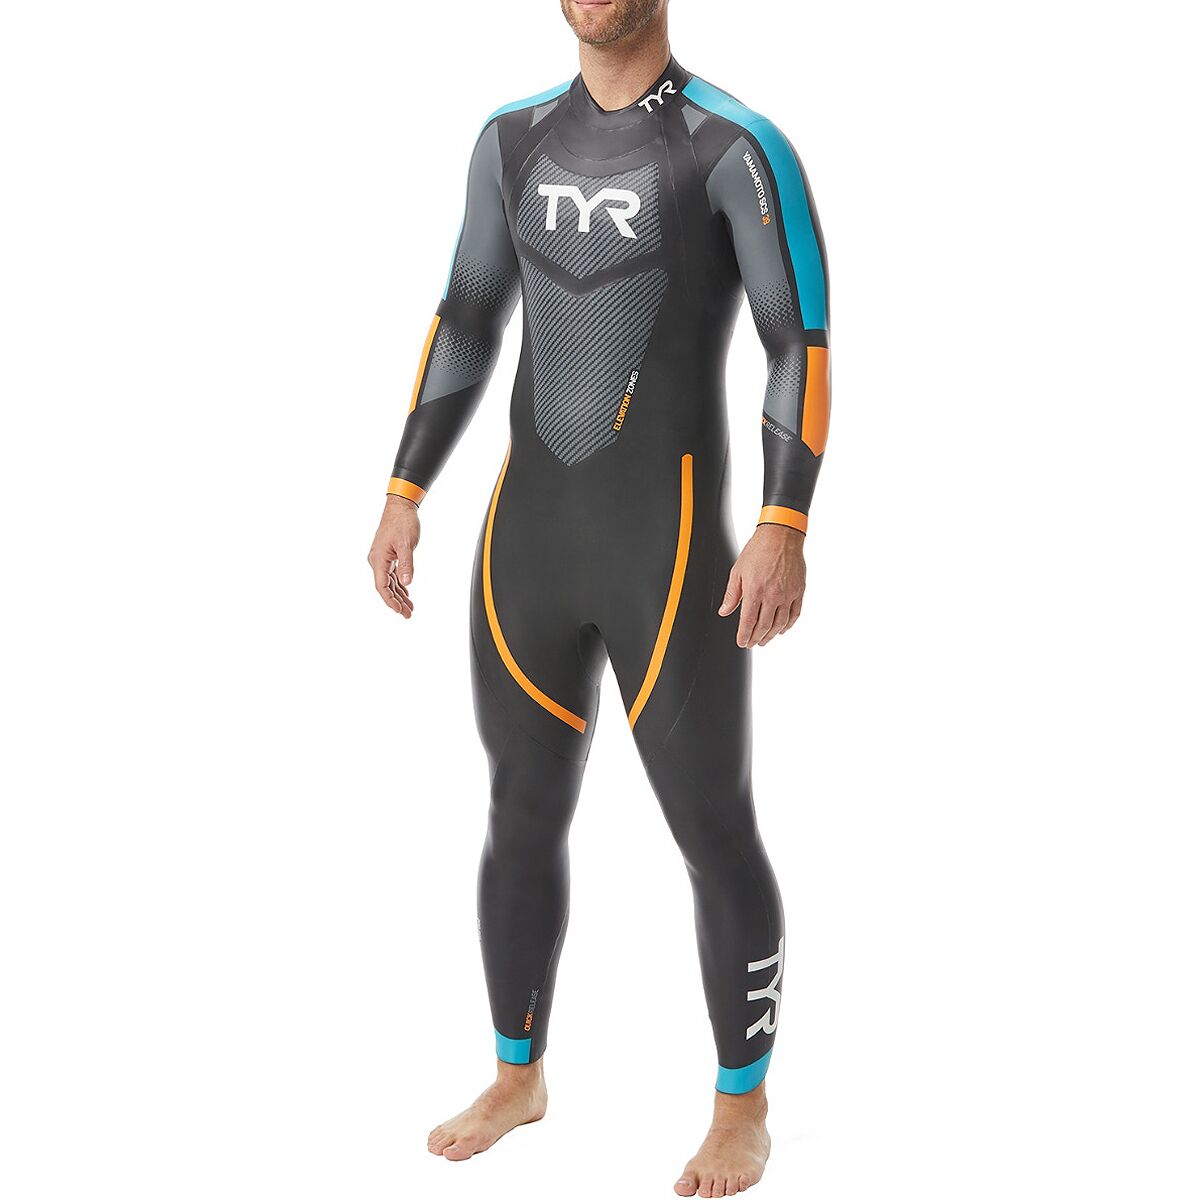 TYR Cat 2 Wetsuit - Men's Black/Blue/Orange, S/M